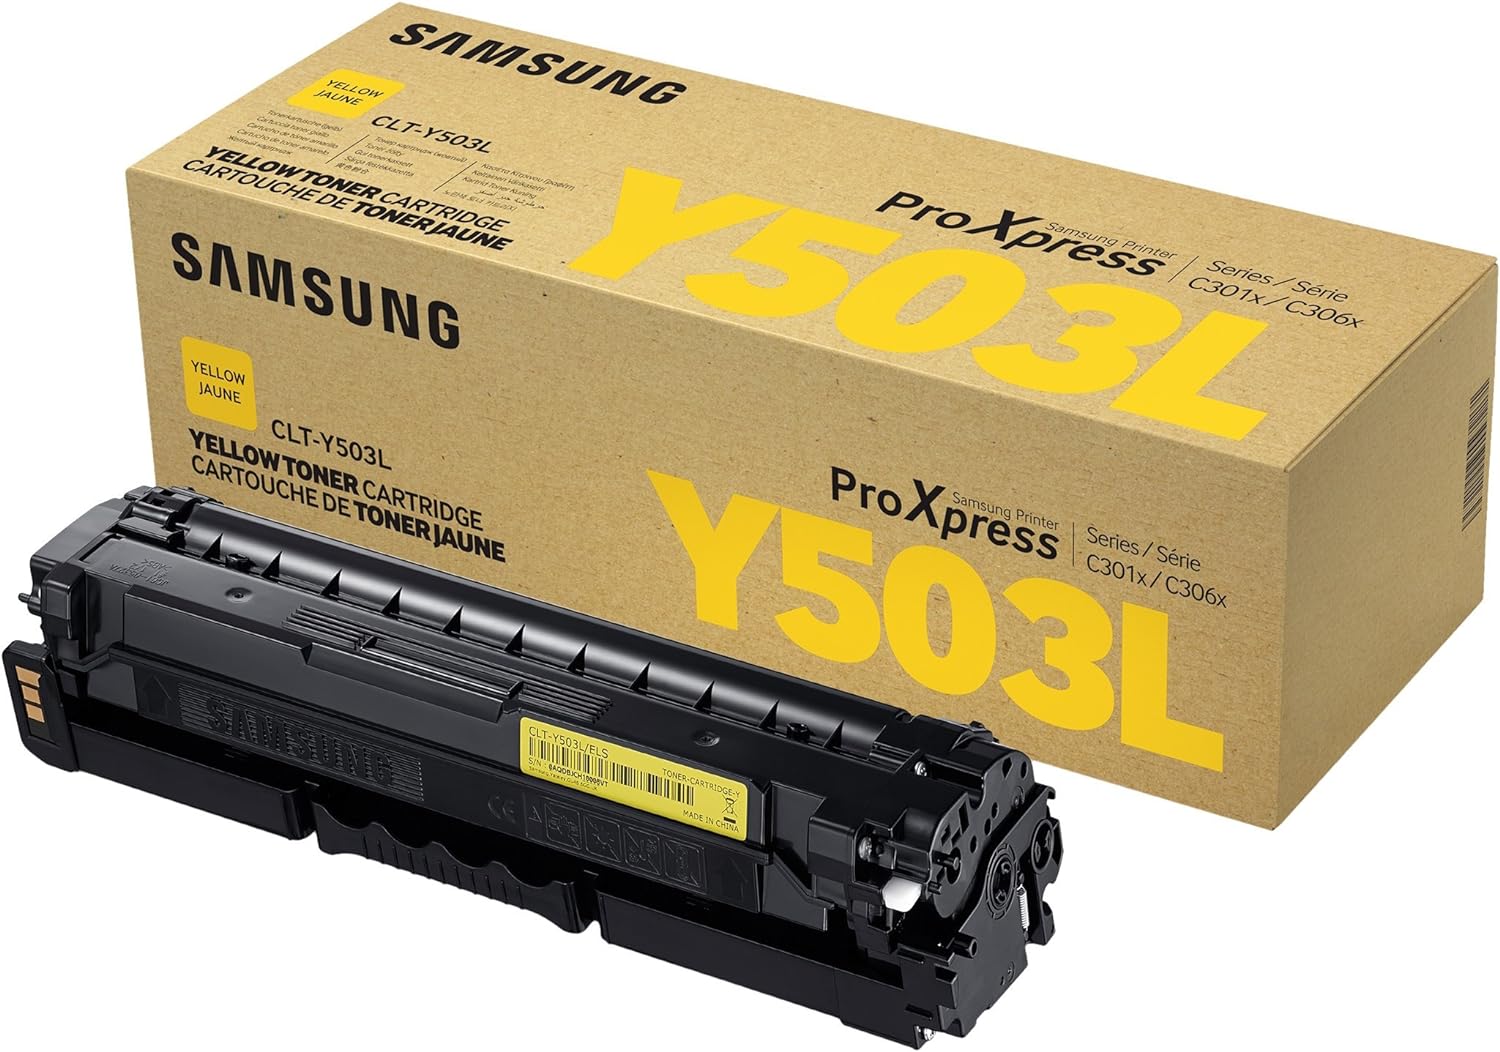 Samsung CLTY503L/XAA Laser Printer Clt-y503l Yellow Toner Cartridge - Samsung Parts USA